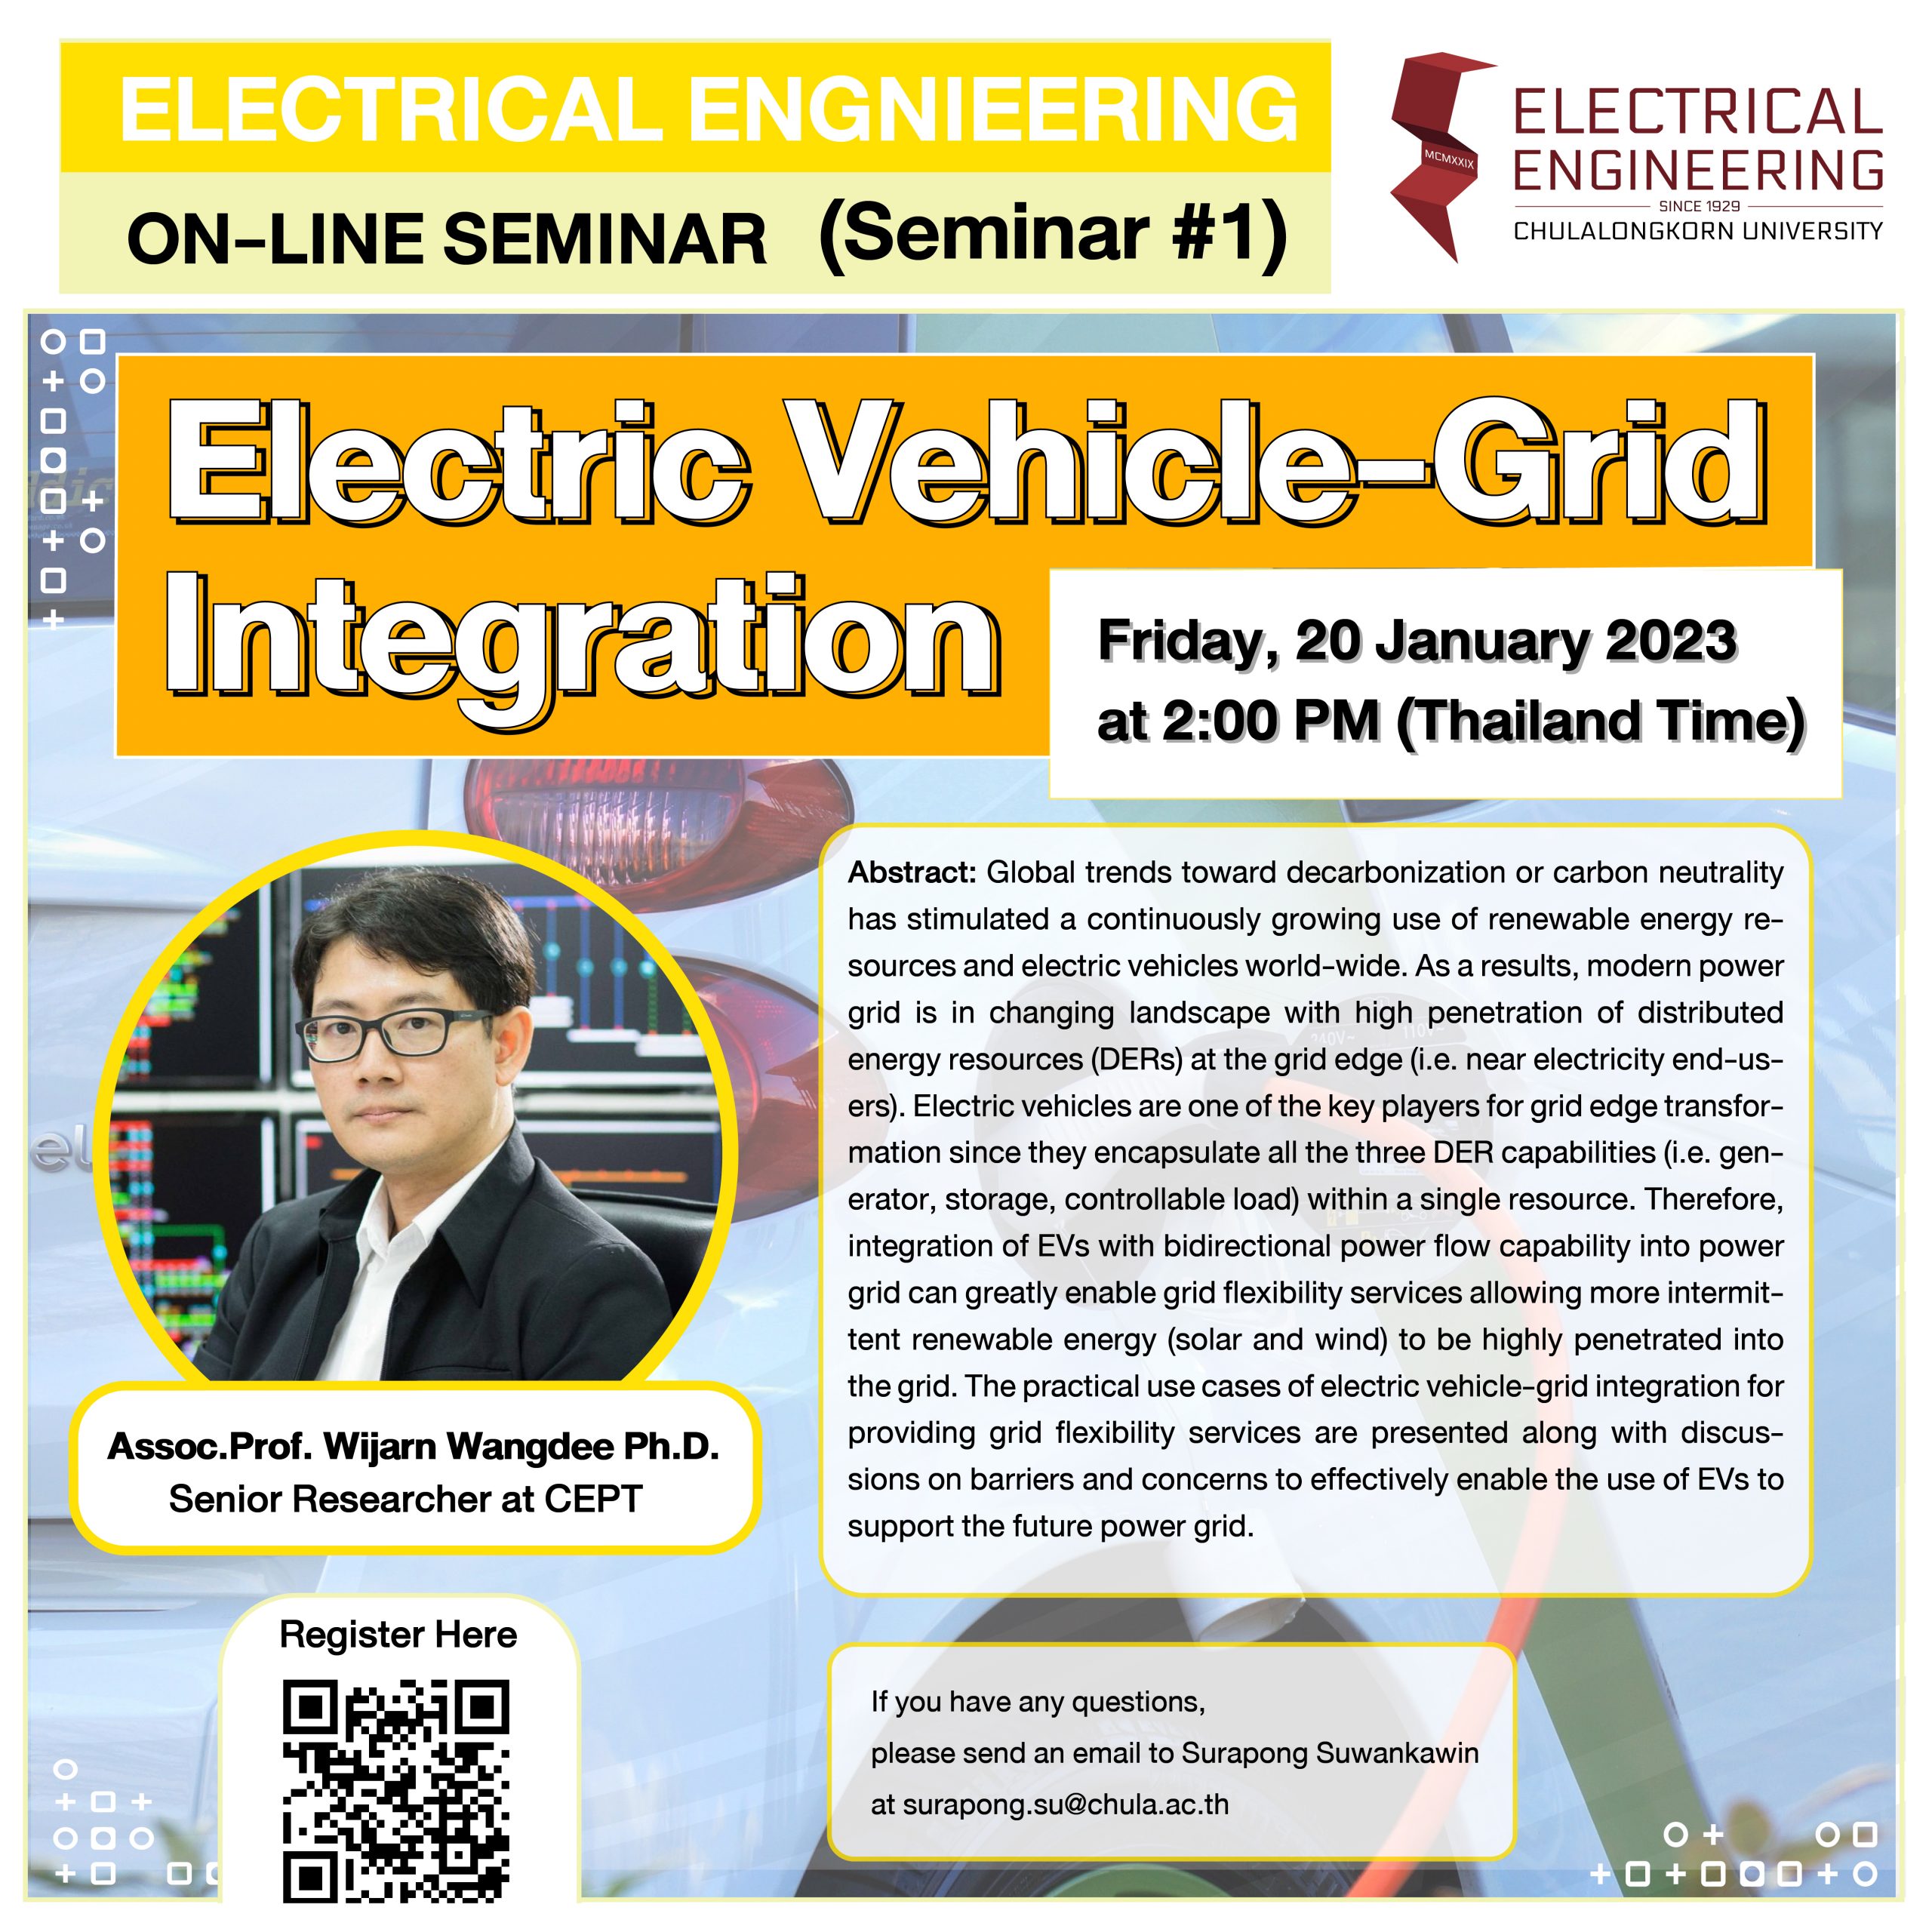 ELECTRICAL ENGNIEERING ON-LINE SEMINAR (Seminar #1) "Electric Vehicle-Grid Integration"